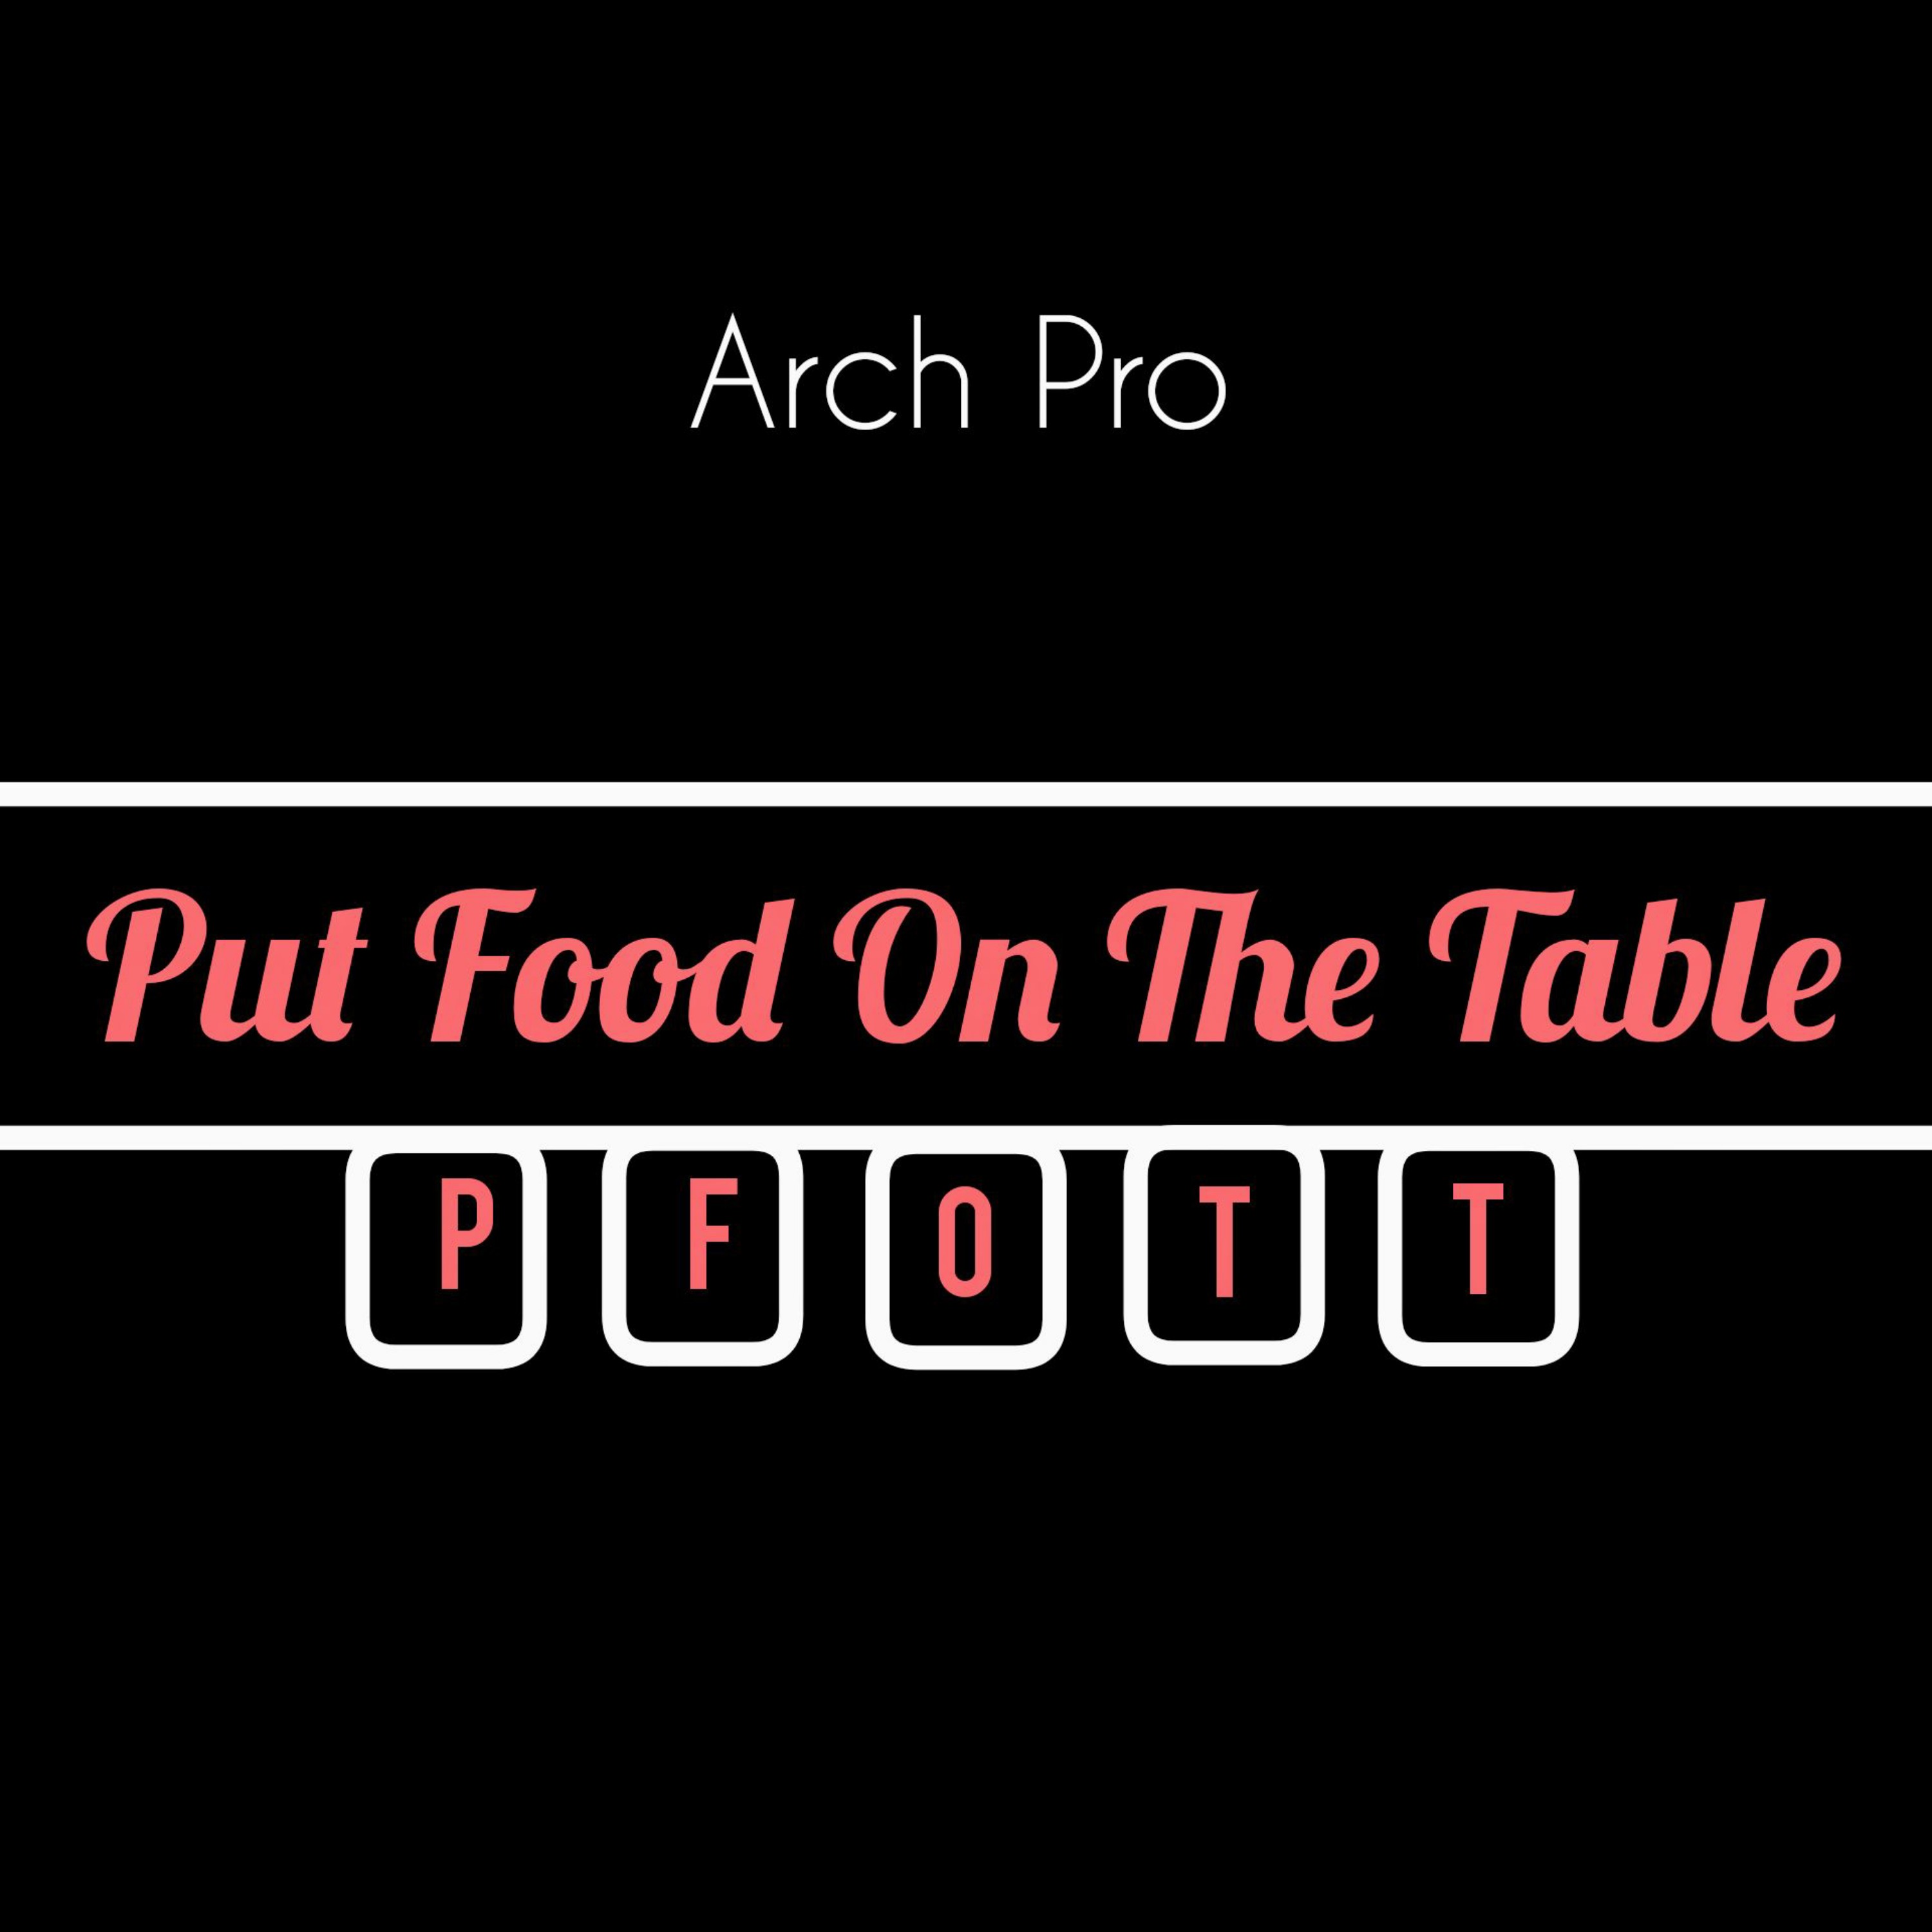 Put food on the table (PFOTT) - Arch Pro